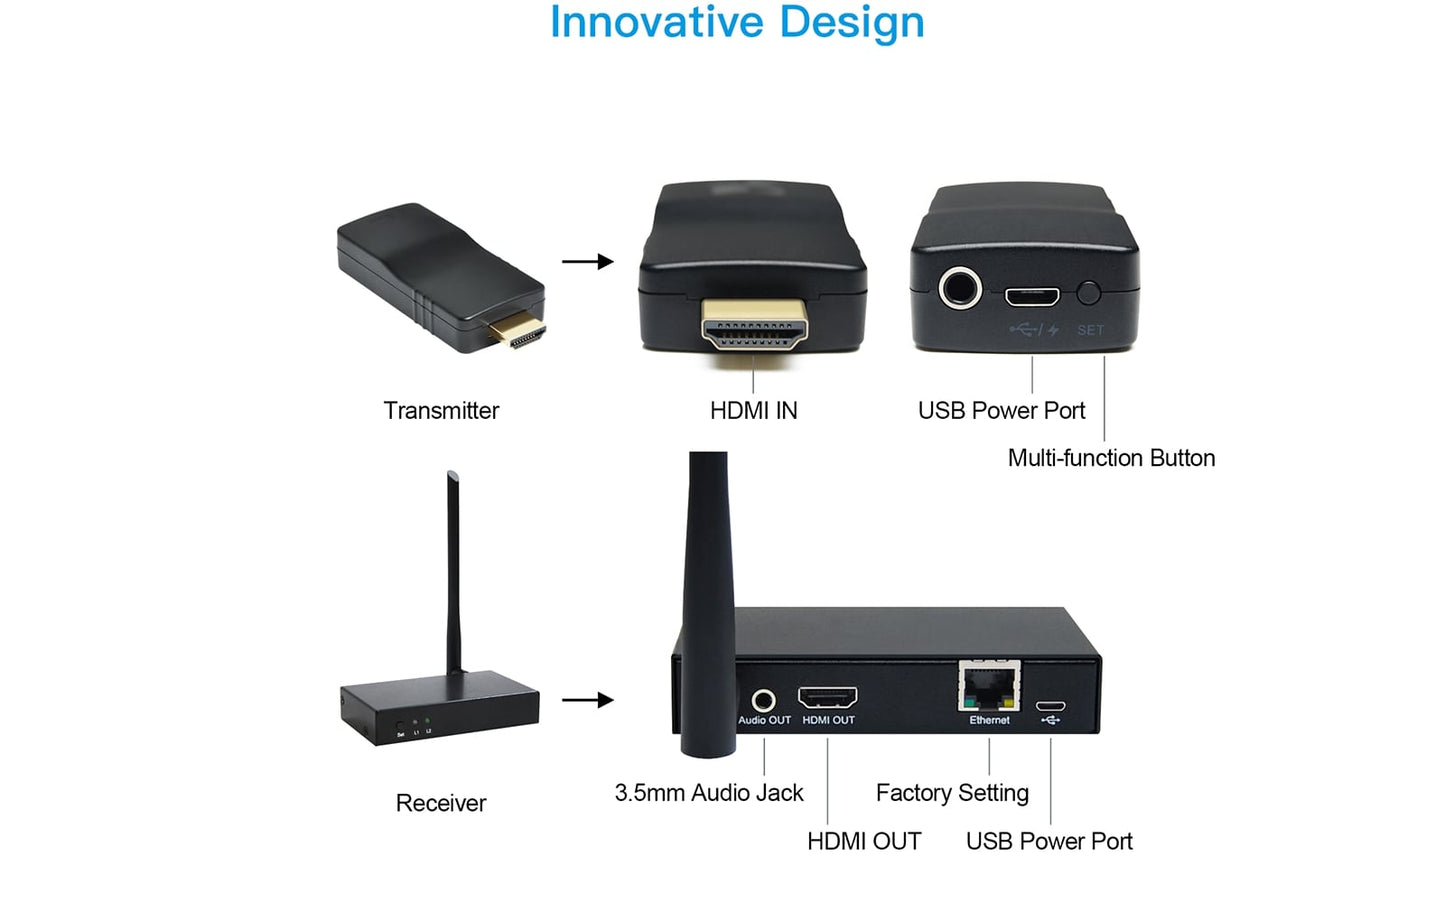 whe-15 wireless hdni video extender- innovative design